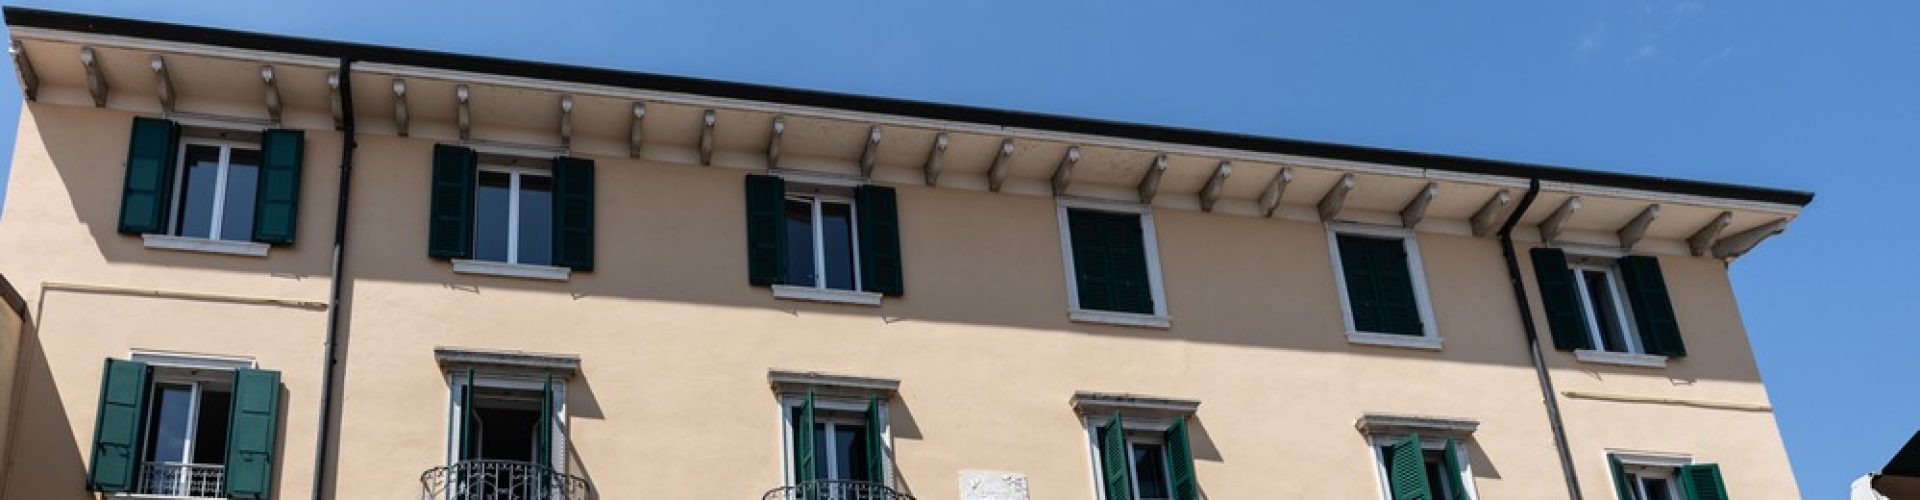 Appartamento 1b - Palazzo Betteloni_10